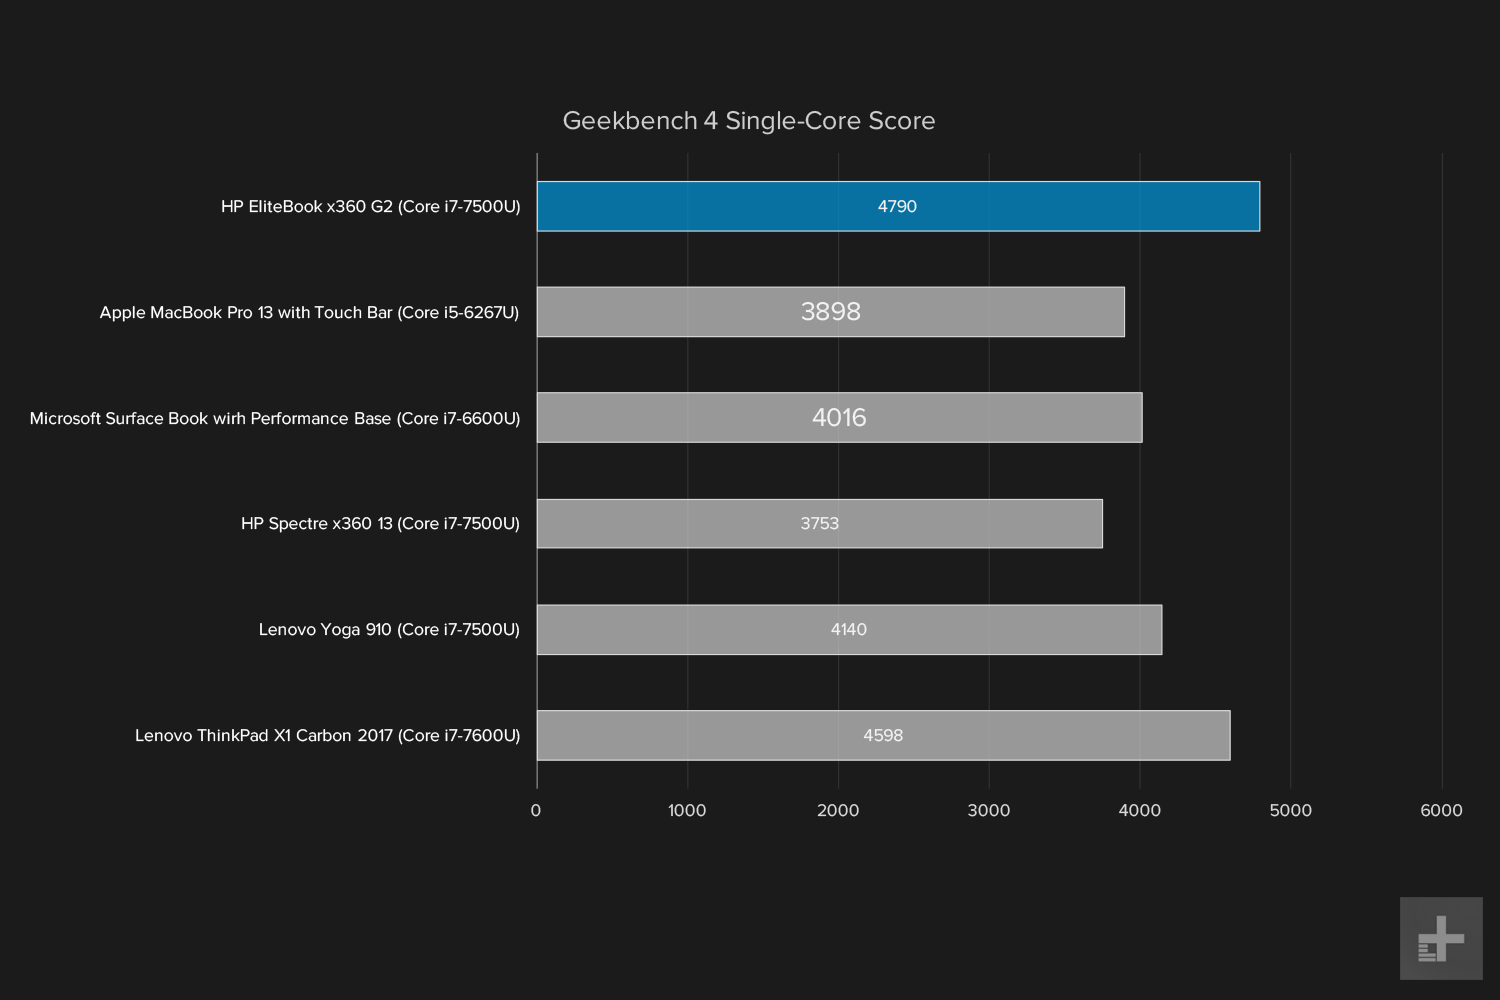 hp elitebook x360 g2 review geekbench singlecore graph